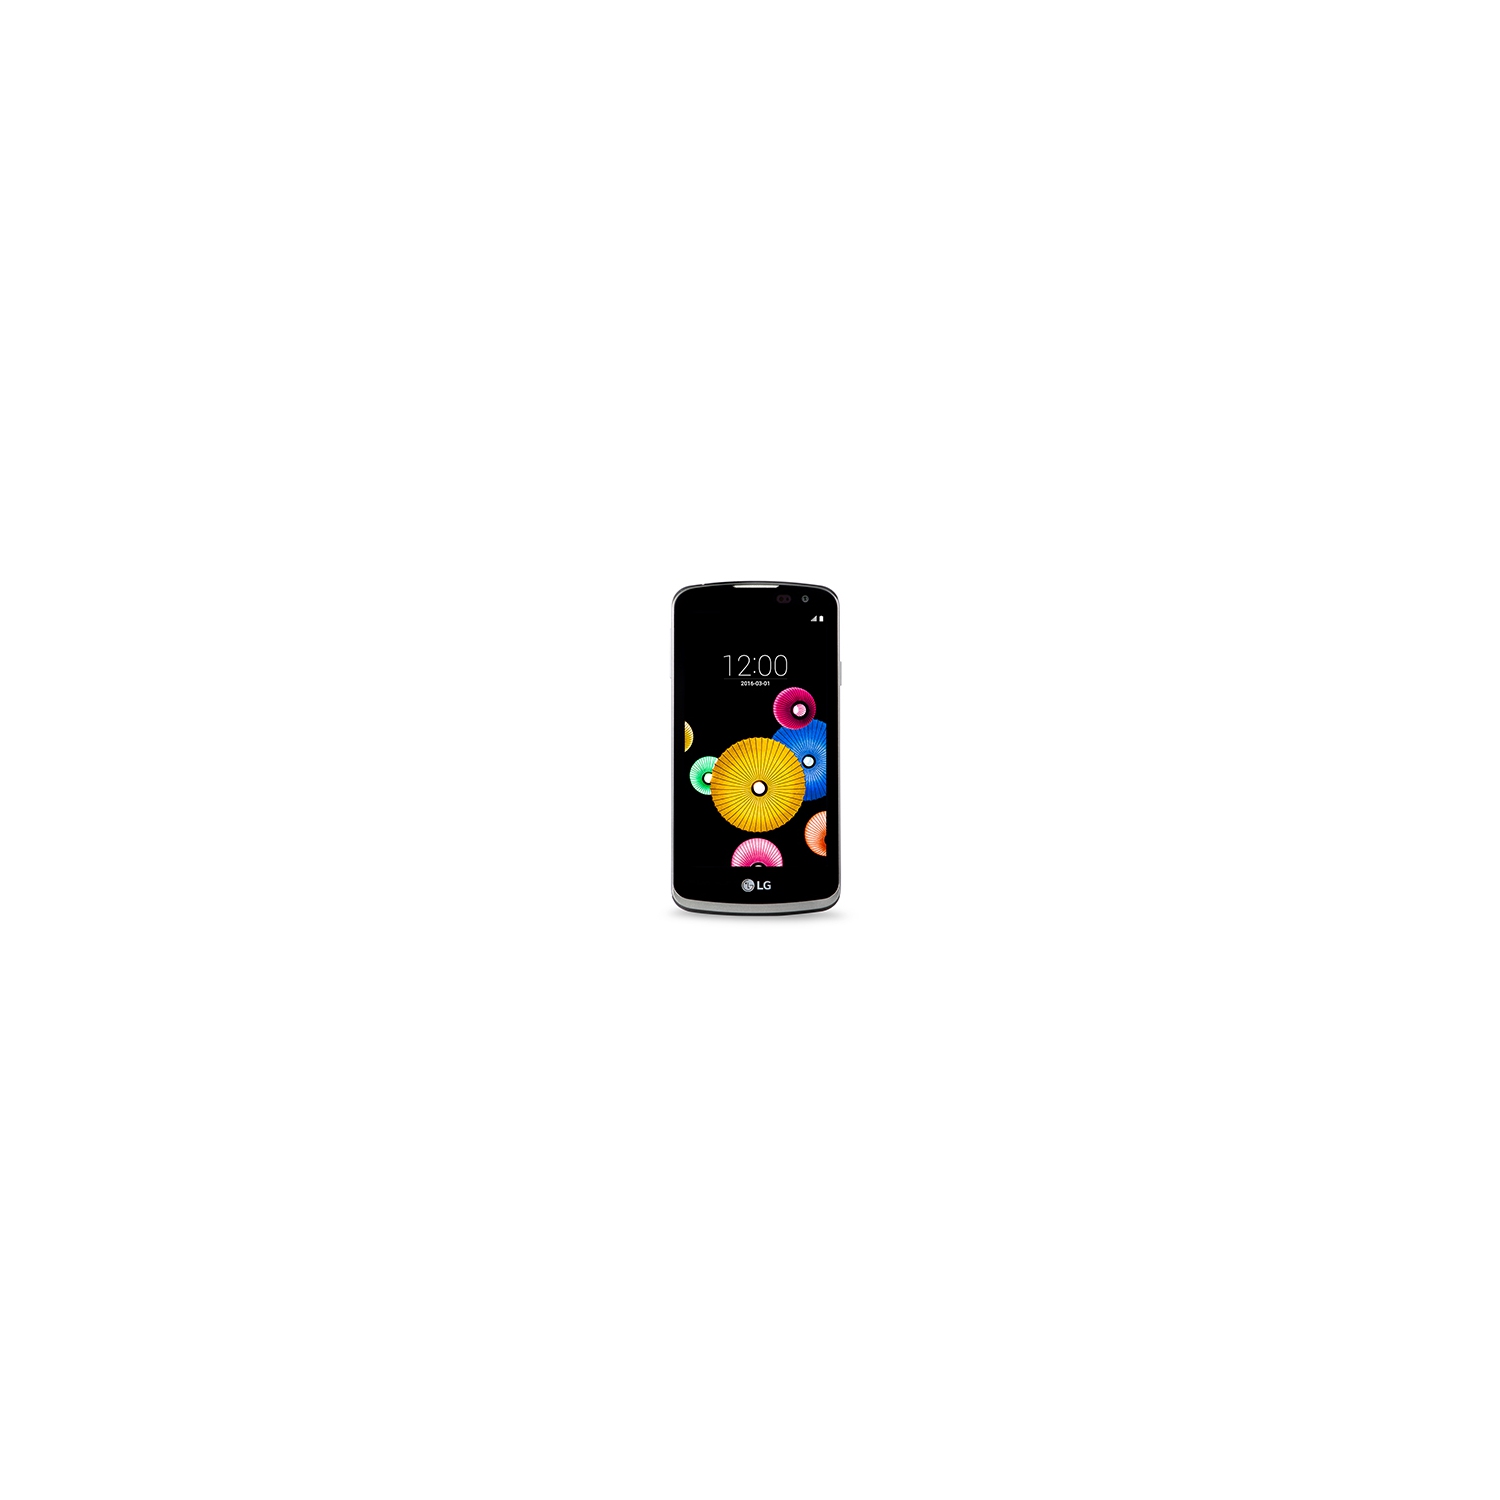 LG K4, 4.5" LCD - 8GB, K121, Black (Unlocked) Android 5.0, 4G LTE, Smartphone